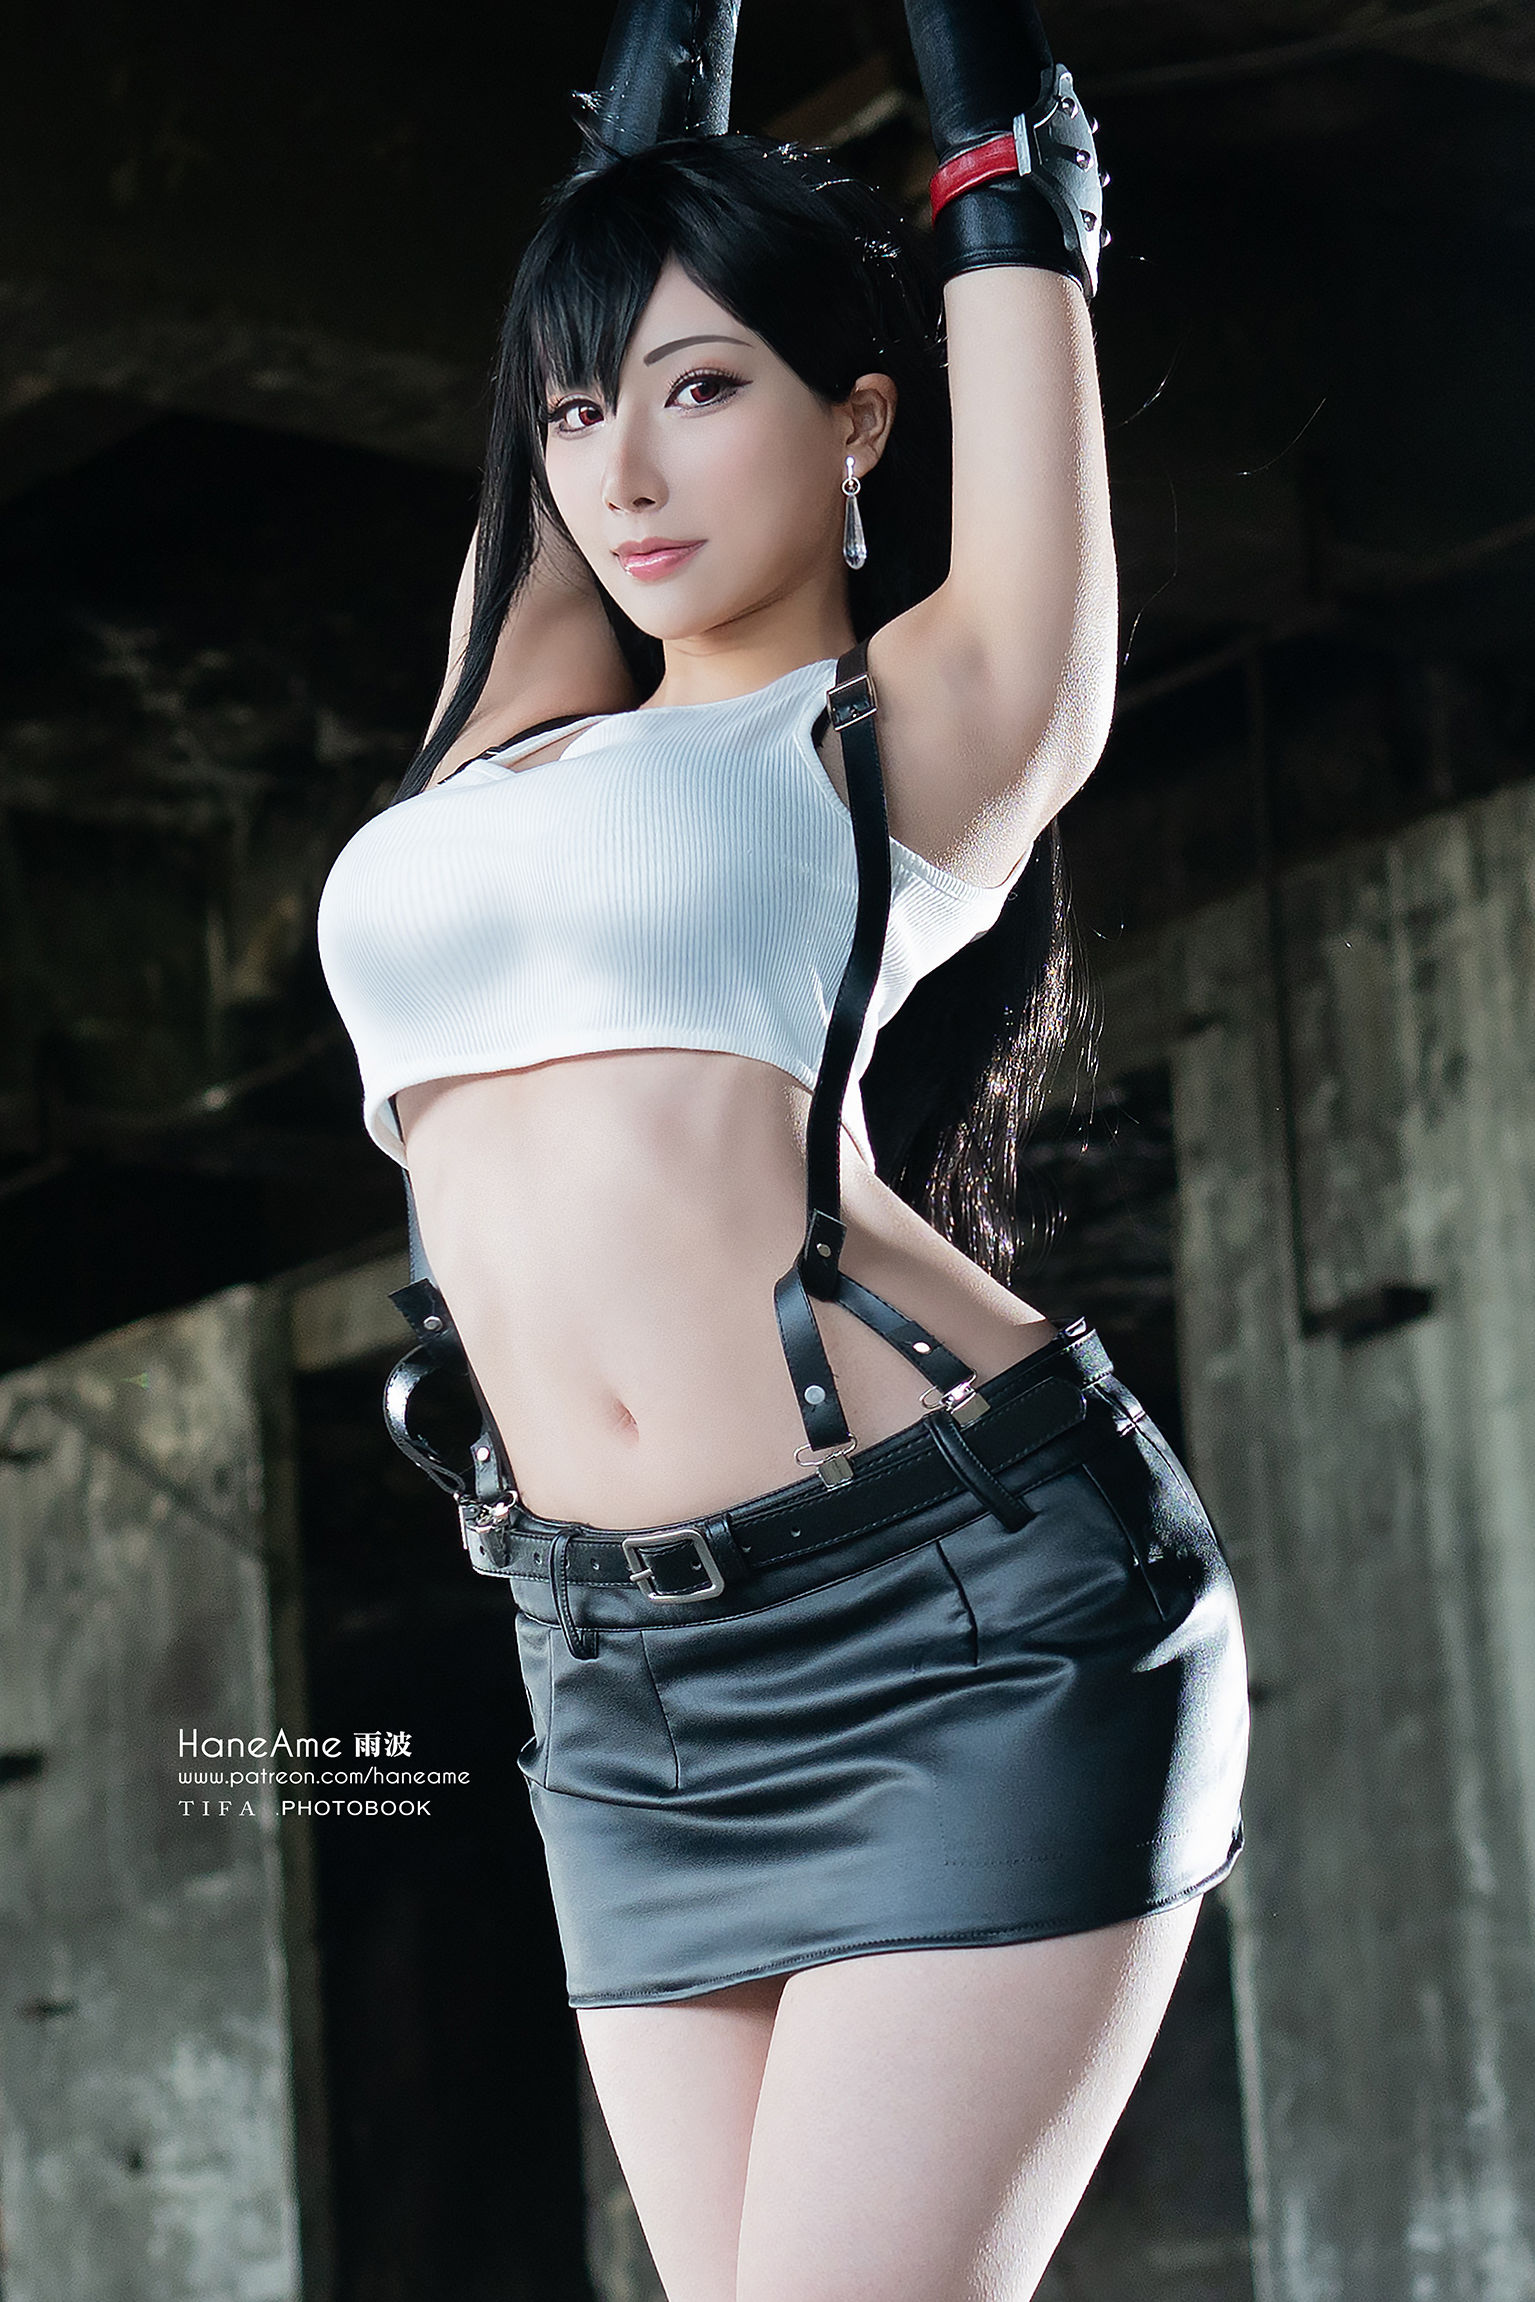 Hane Ame 雨波写真 - TIFA Photobook (Final Fantasy VII) - 1/(41P)